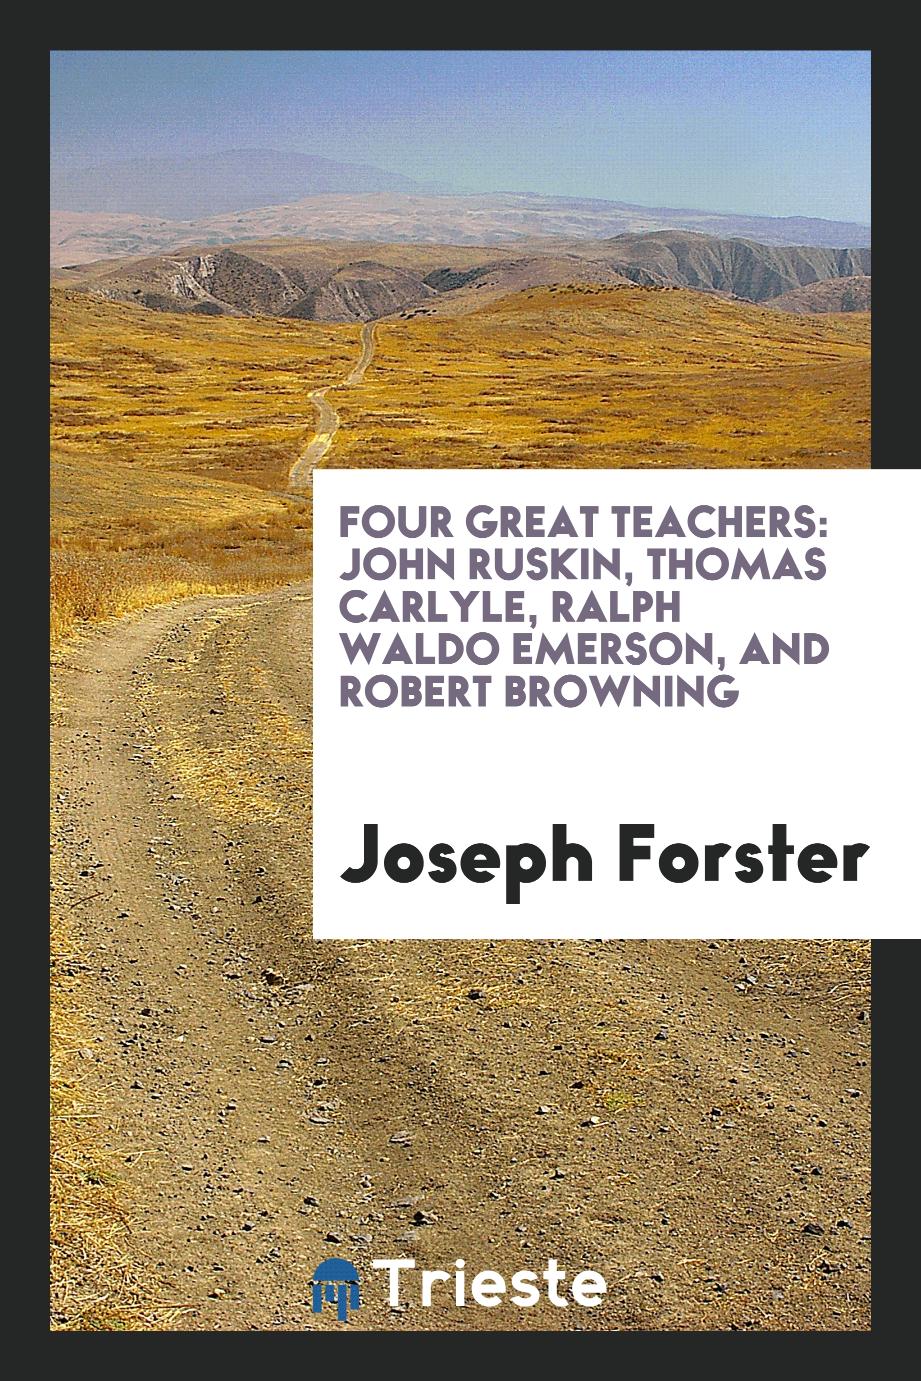 Four great teachers: John Ruskin, Thomas Carlyle, Ralph Waldo Emerson, and Robert Browning